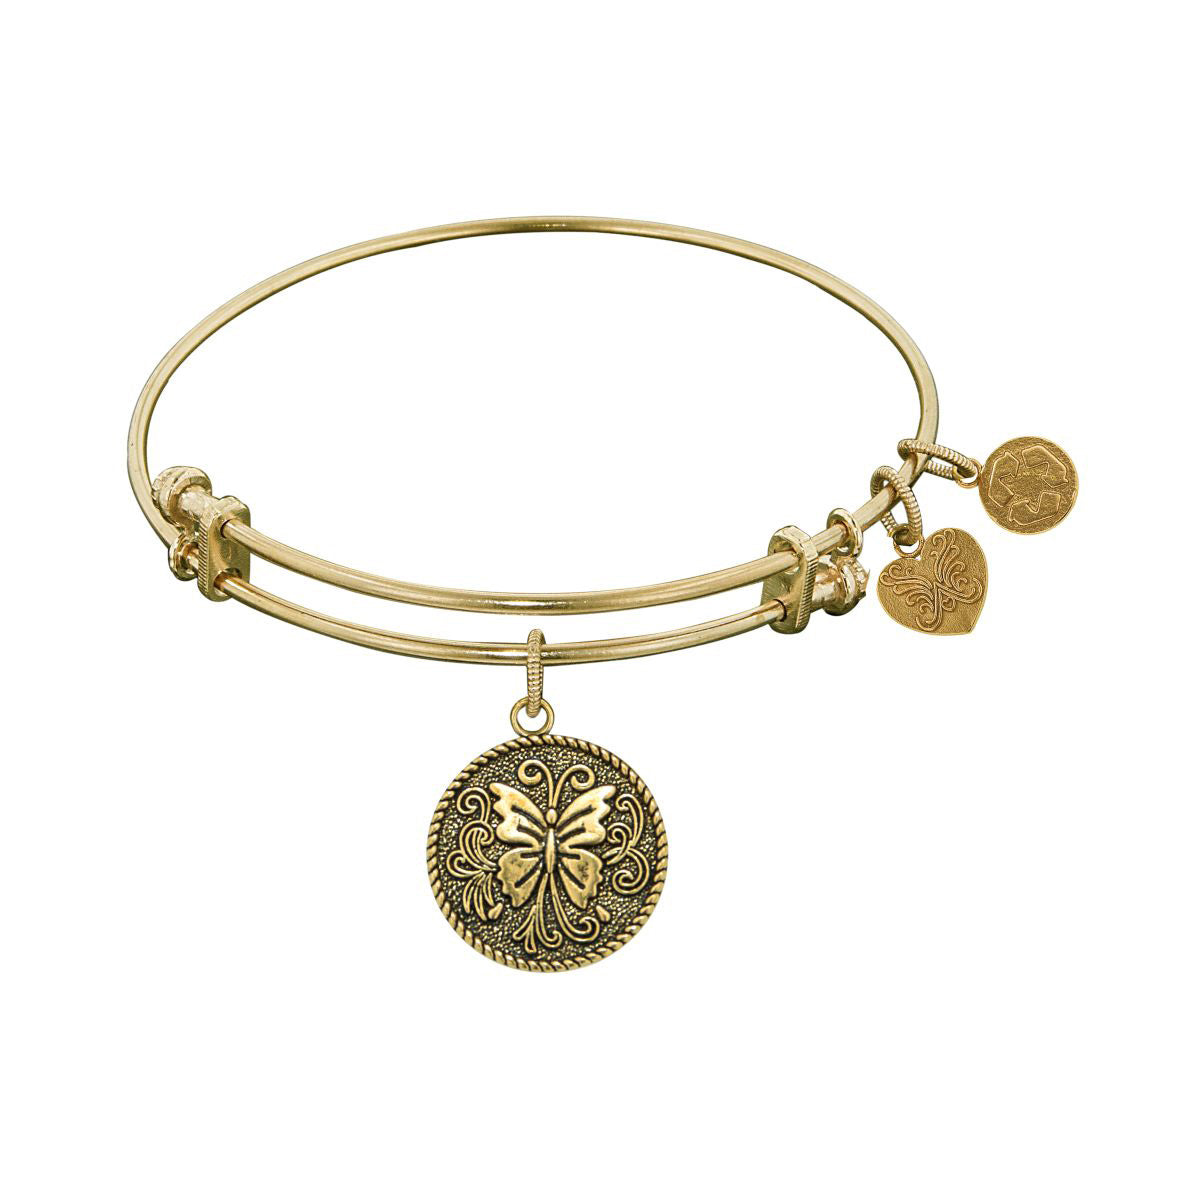 Stipple Finish Brass Butterfly Angelica Bangle Bracelet, 7.25" fine designer jewelry for men and women